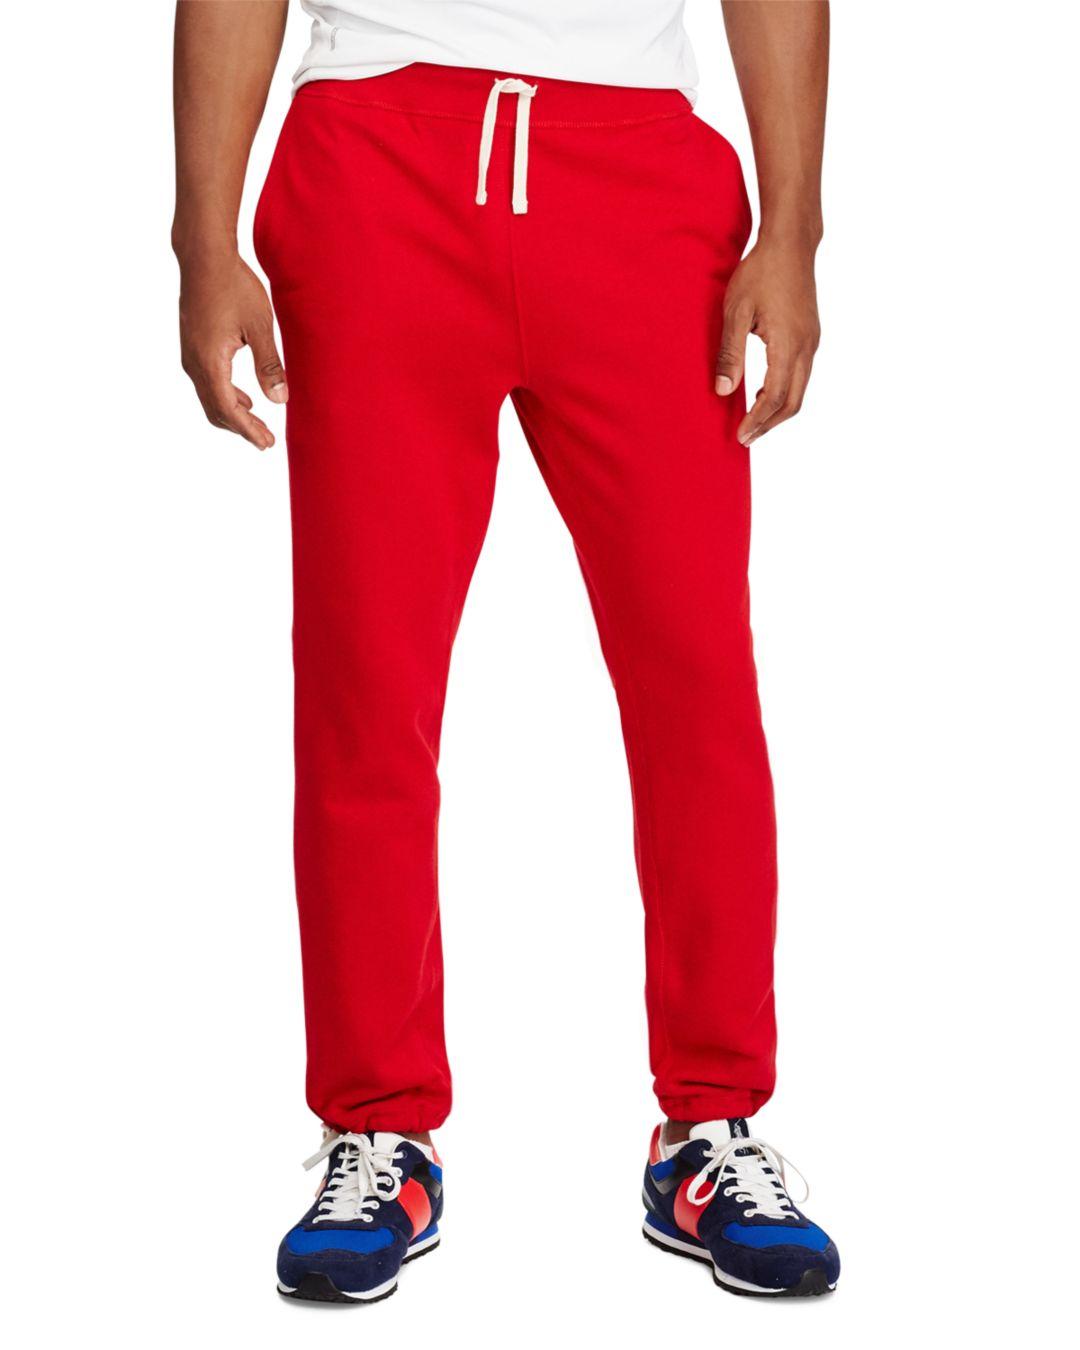 Polo Ralph Lauren Classic Fleece Drawstring Pants in Red for Men - Lyst